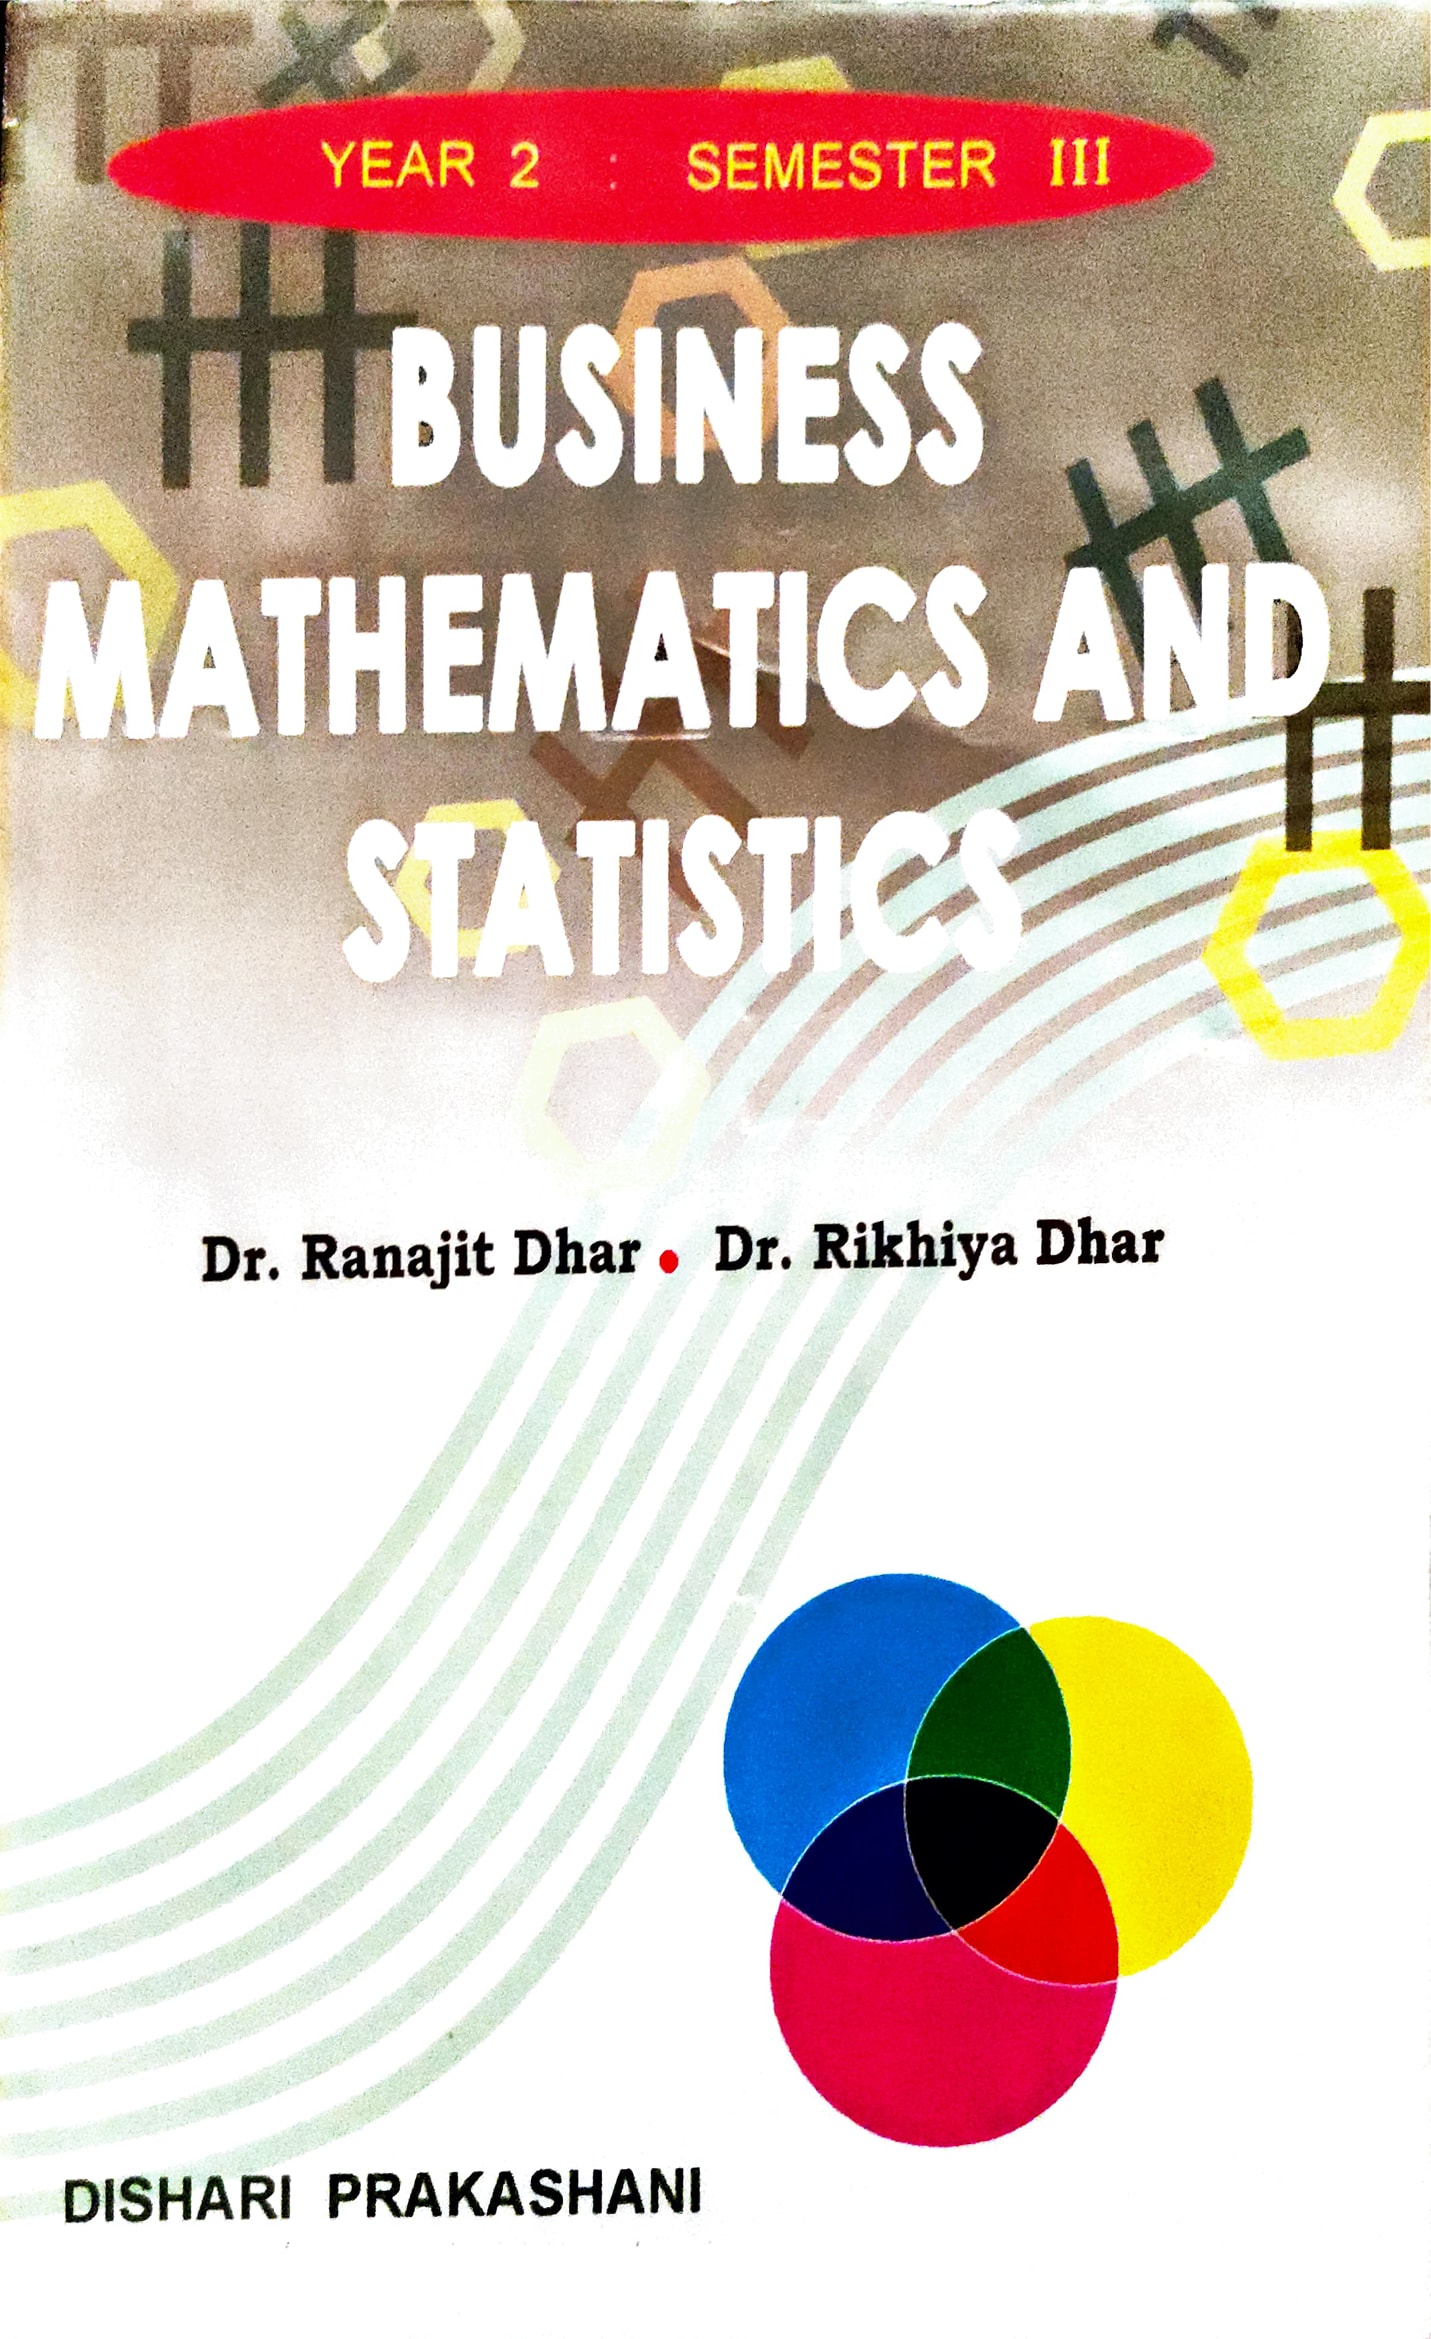 Business Mathematics and Statistics, 2nd year, Dr. Ranajit Dhar, Dr. Rikhiya Dhar For 3rd sem